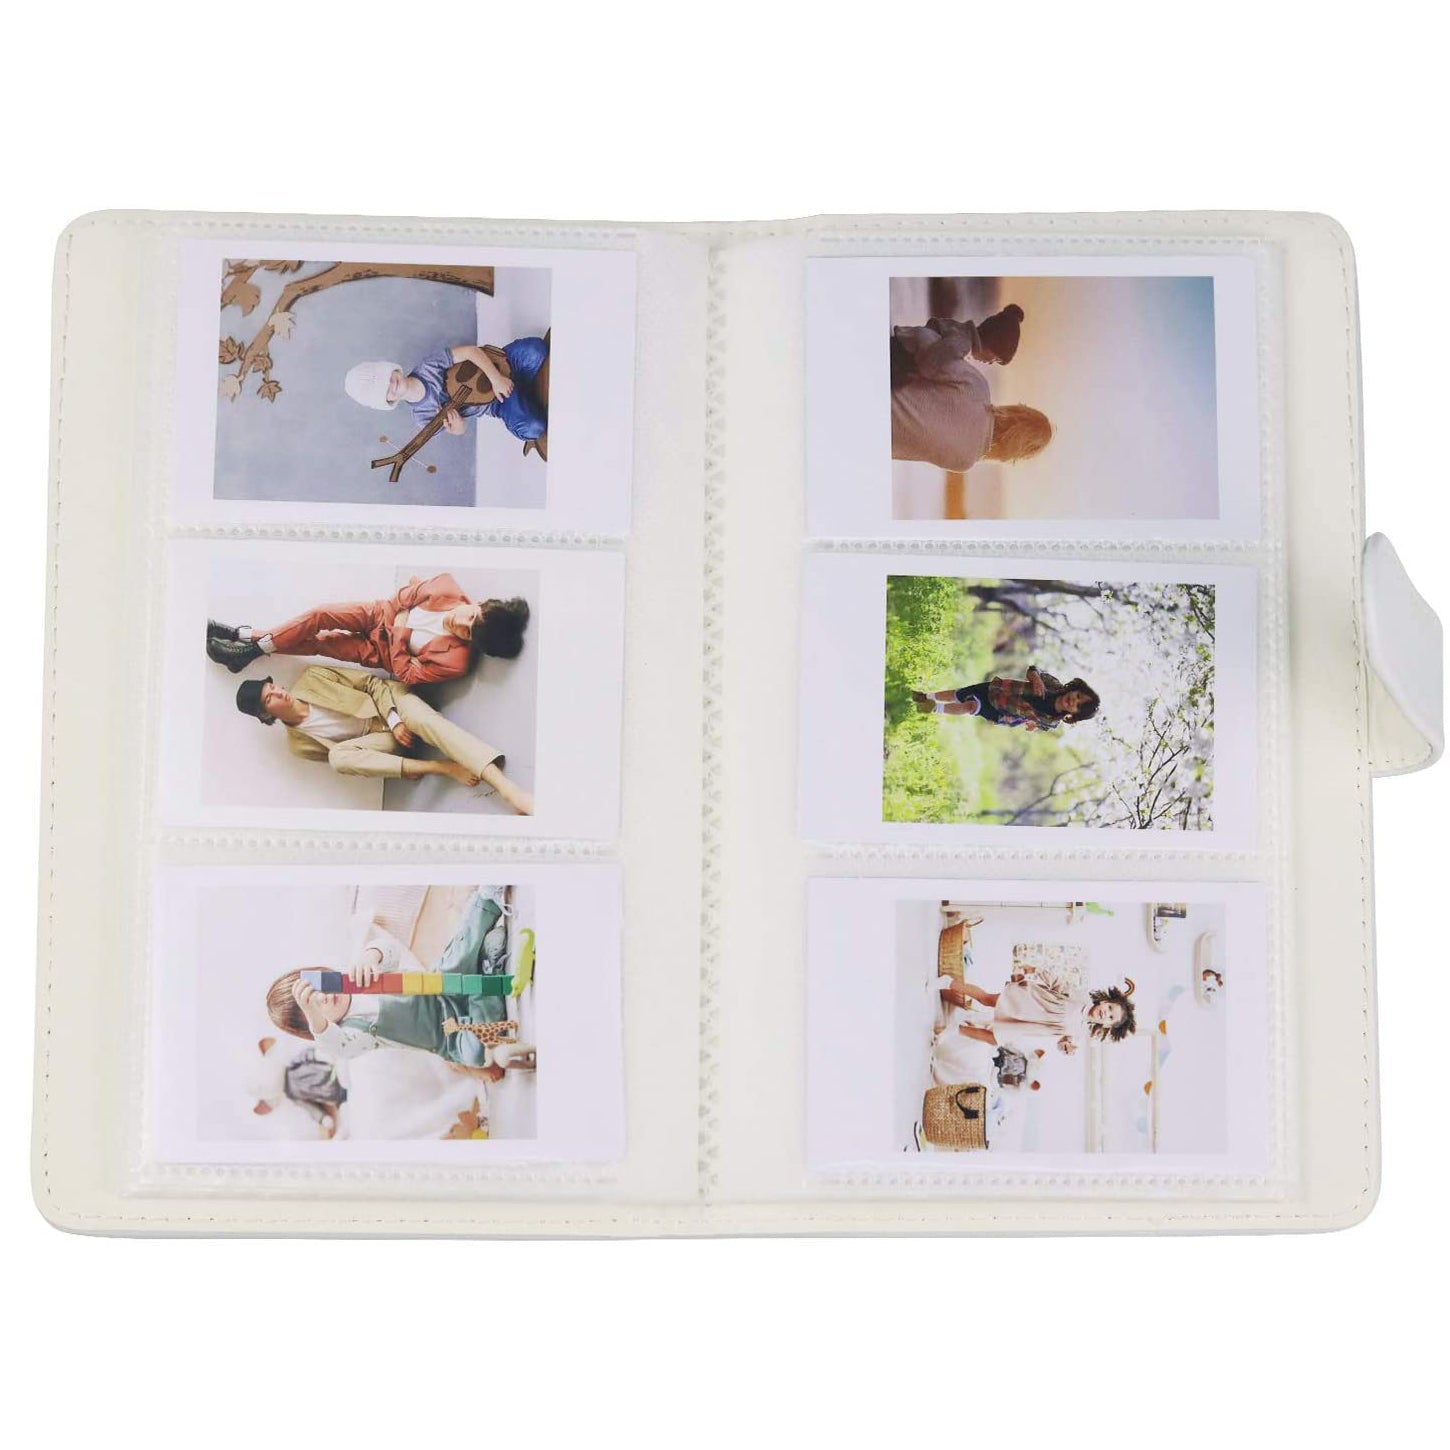 Fujifilm Instax Mini 10X1 candy pop Instant Film with 96-sheet Album for mini film (lce white)